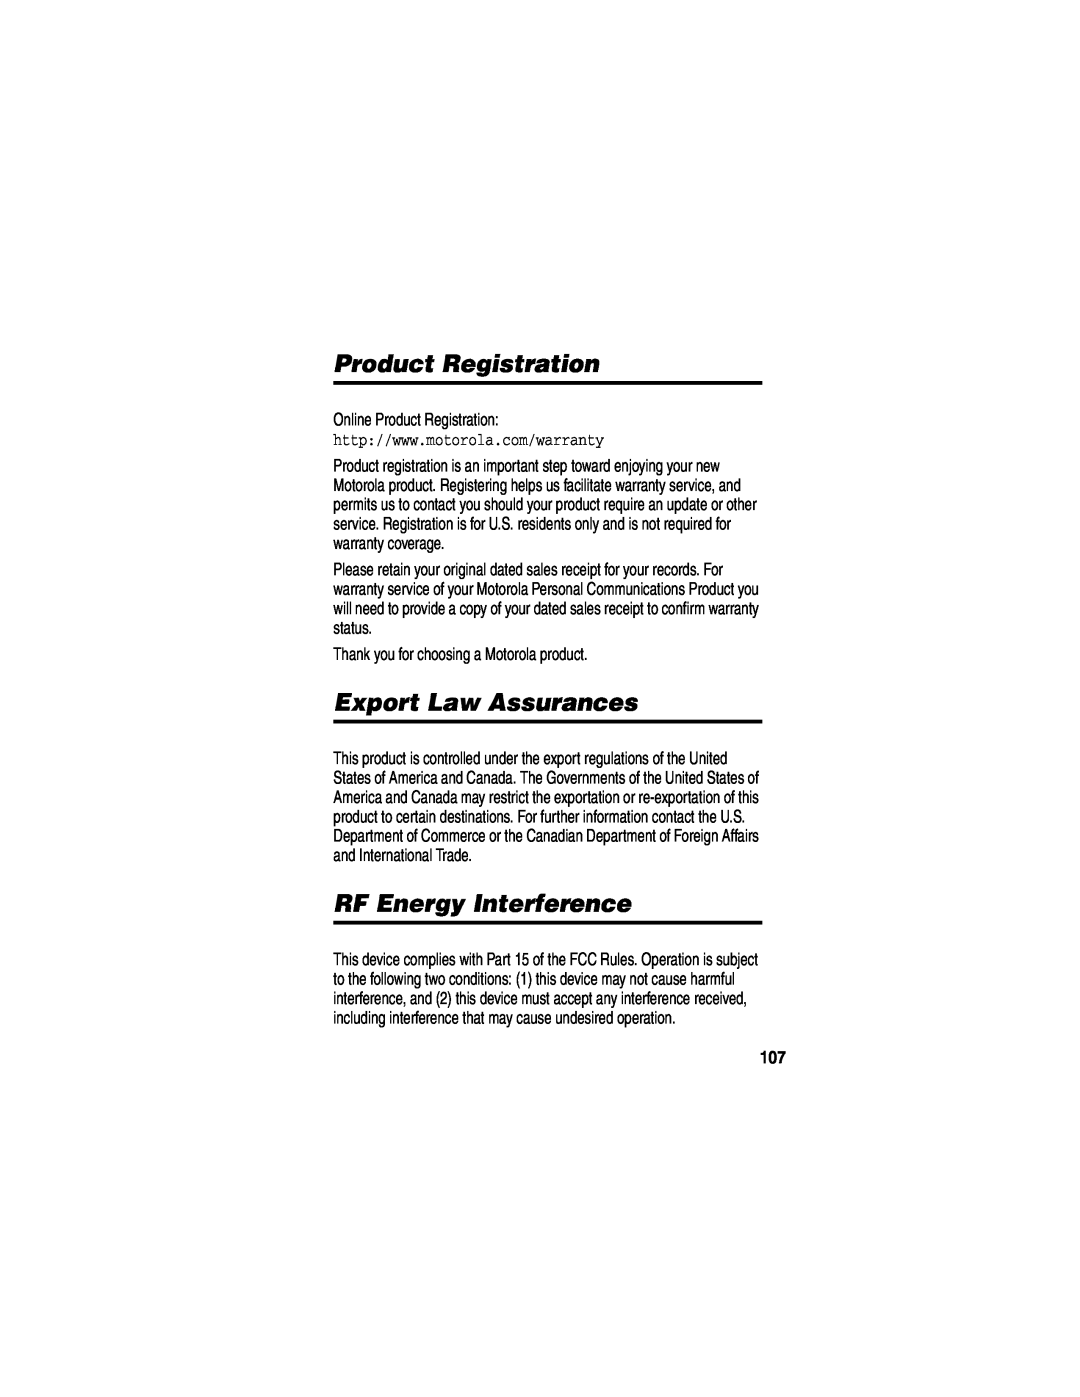 Motorola WIRELESS TELEPHONE manual Product Registration, Export Law Assurances, RF Energy Interference 